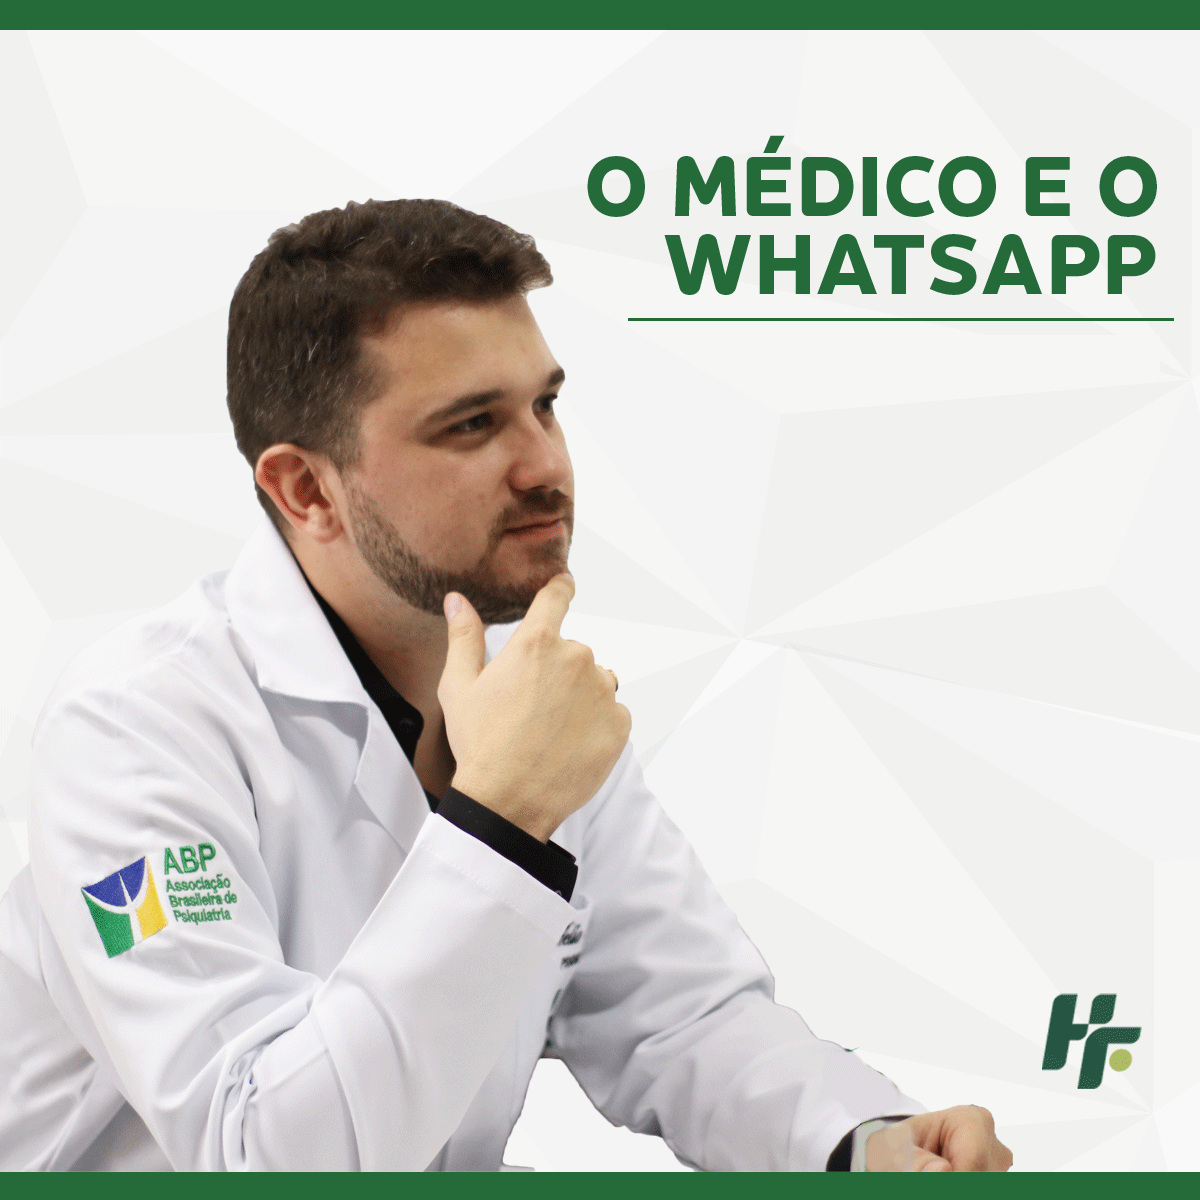 Médico e o whatsapp 1 - Home